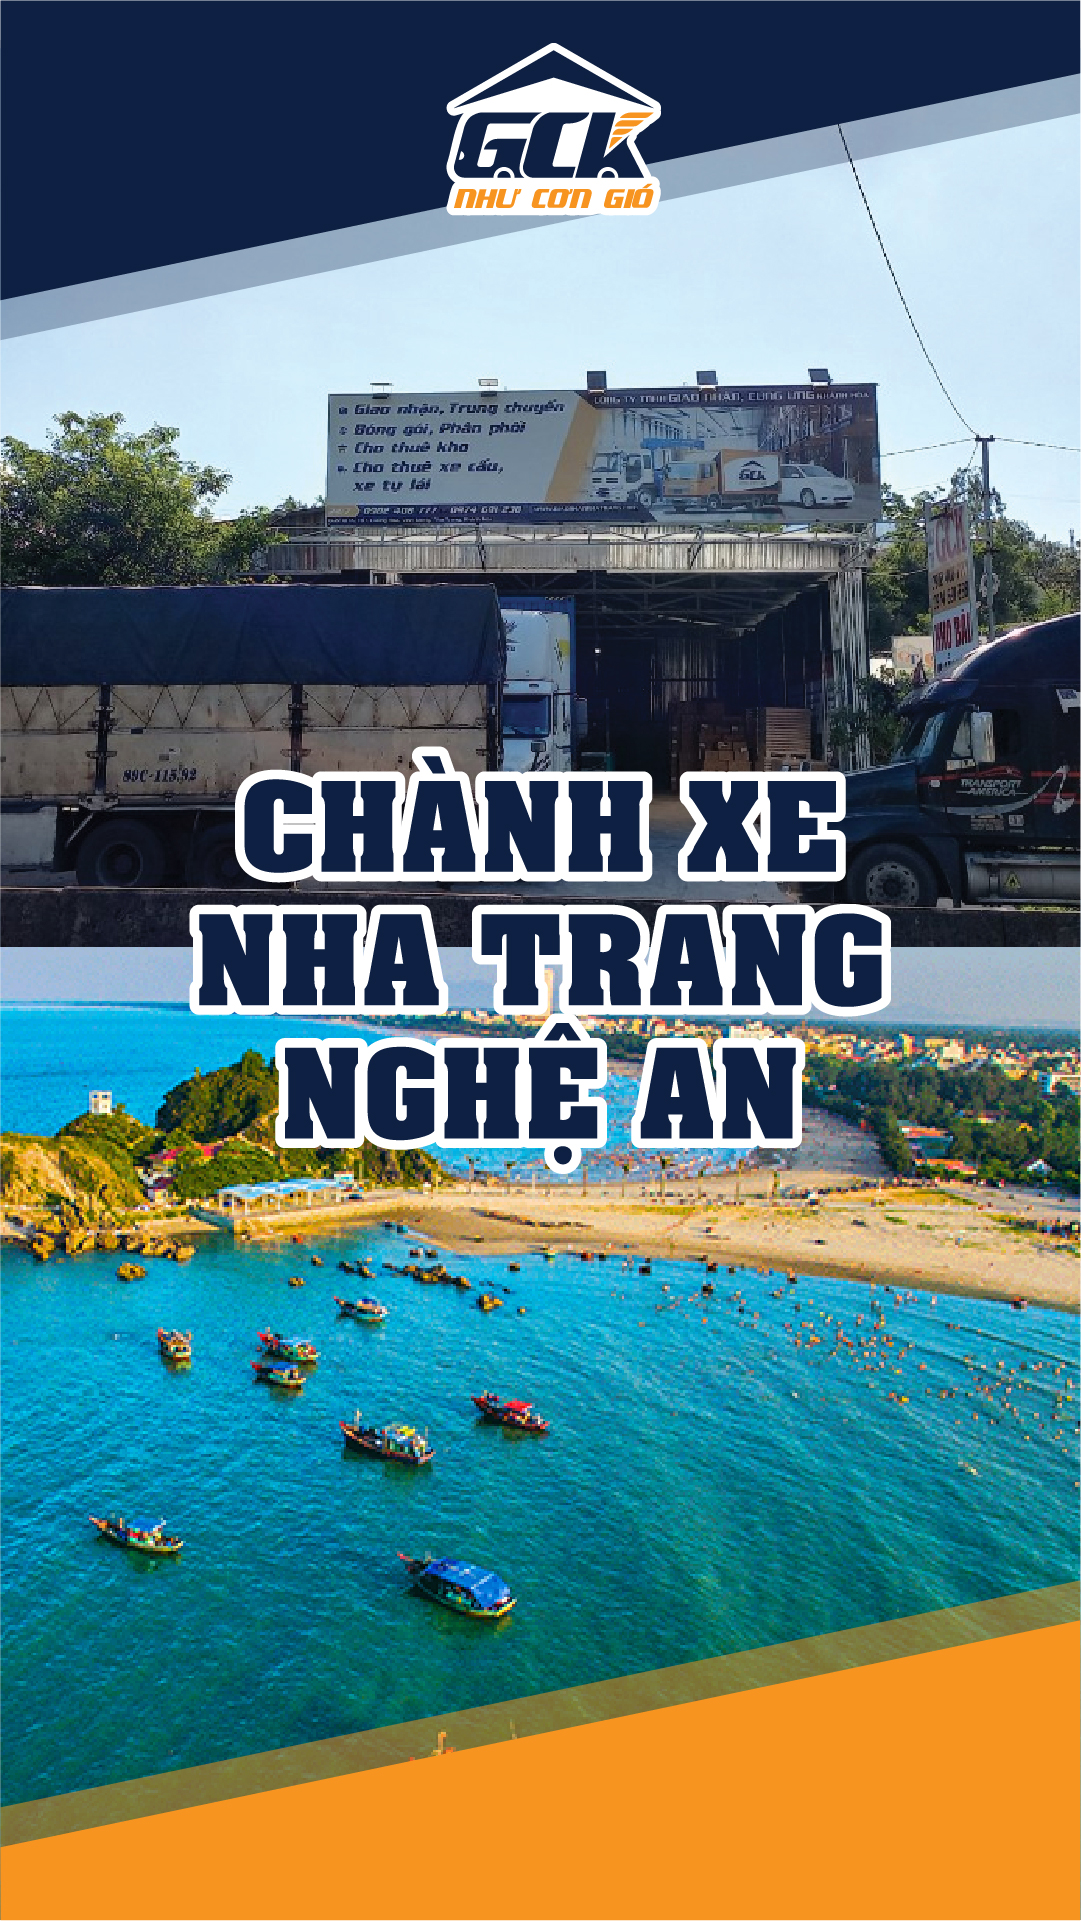 Chanh xe Nha Trang Nghẹ An.